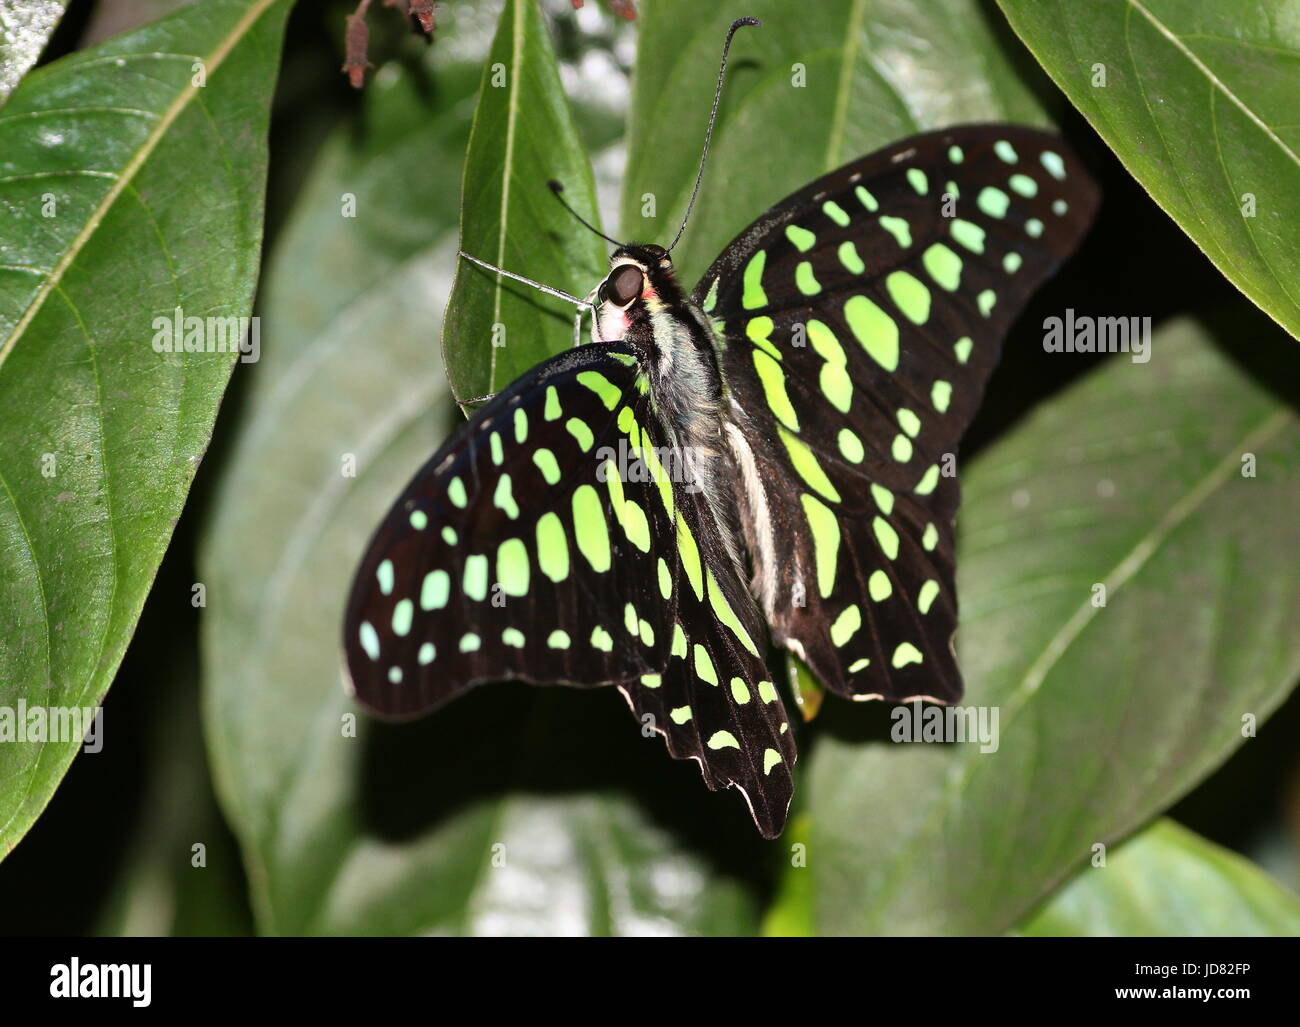 South Asian Tailed grün Jay Schmetterling (Graphium Agamemnon) aka grüne Dreieck oder grün gefleckten Dreieck. Stockfoto